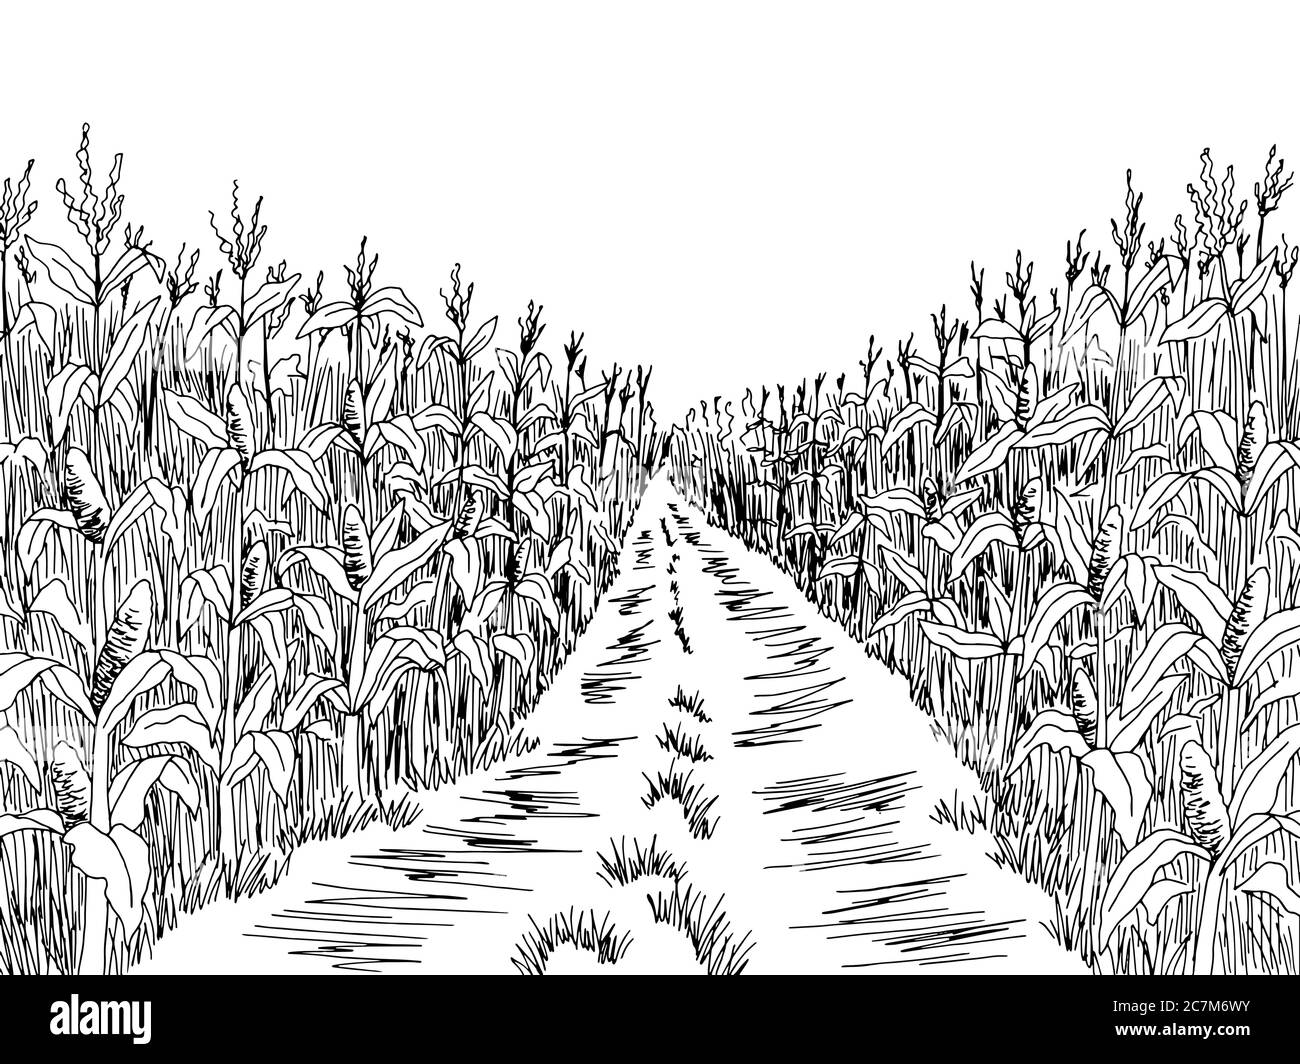 https://c8.alamy.com/comp/2C7M6WY/cornfield-road-graphic-black-white-landscape-sketch-illustration-vector-2C7M6WY.jpg